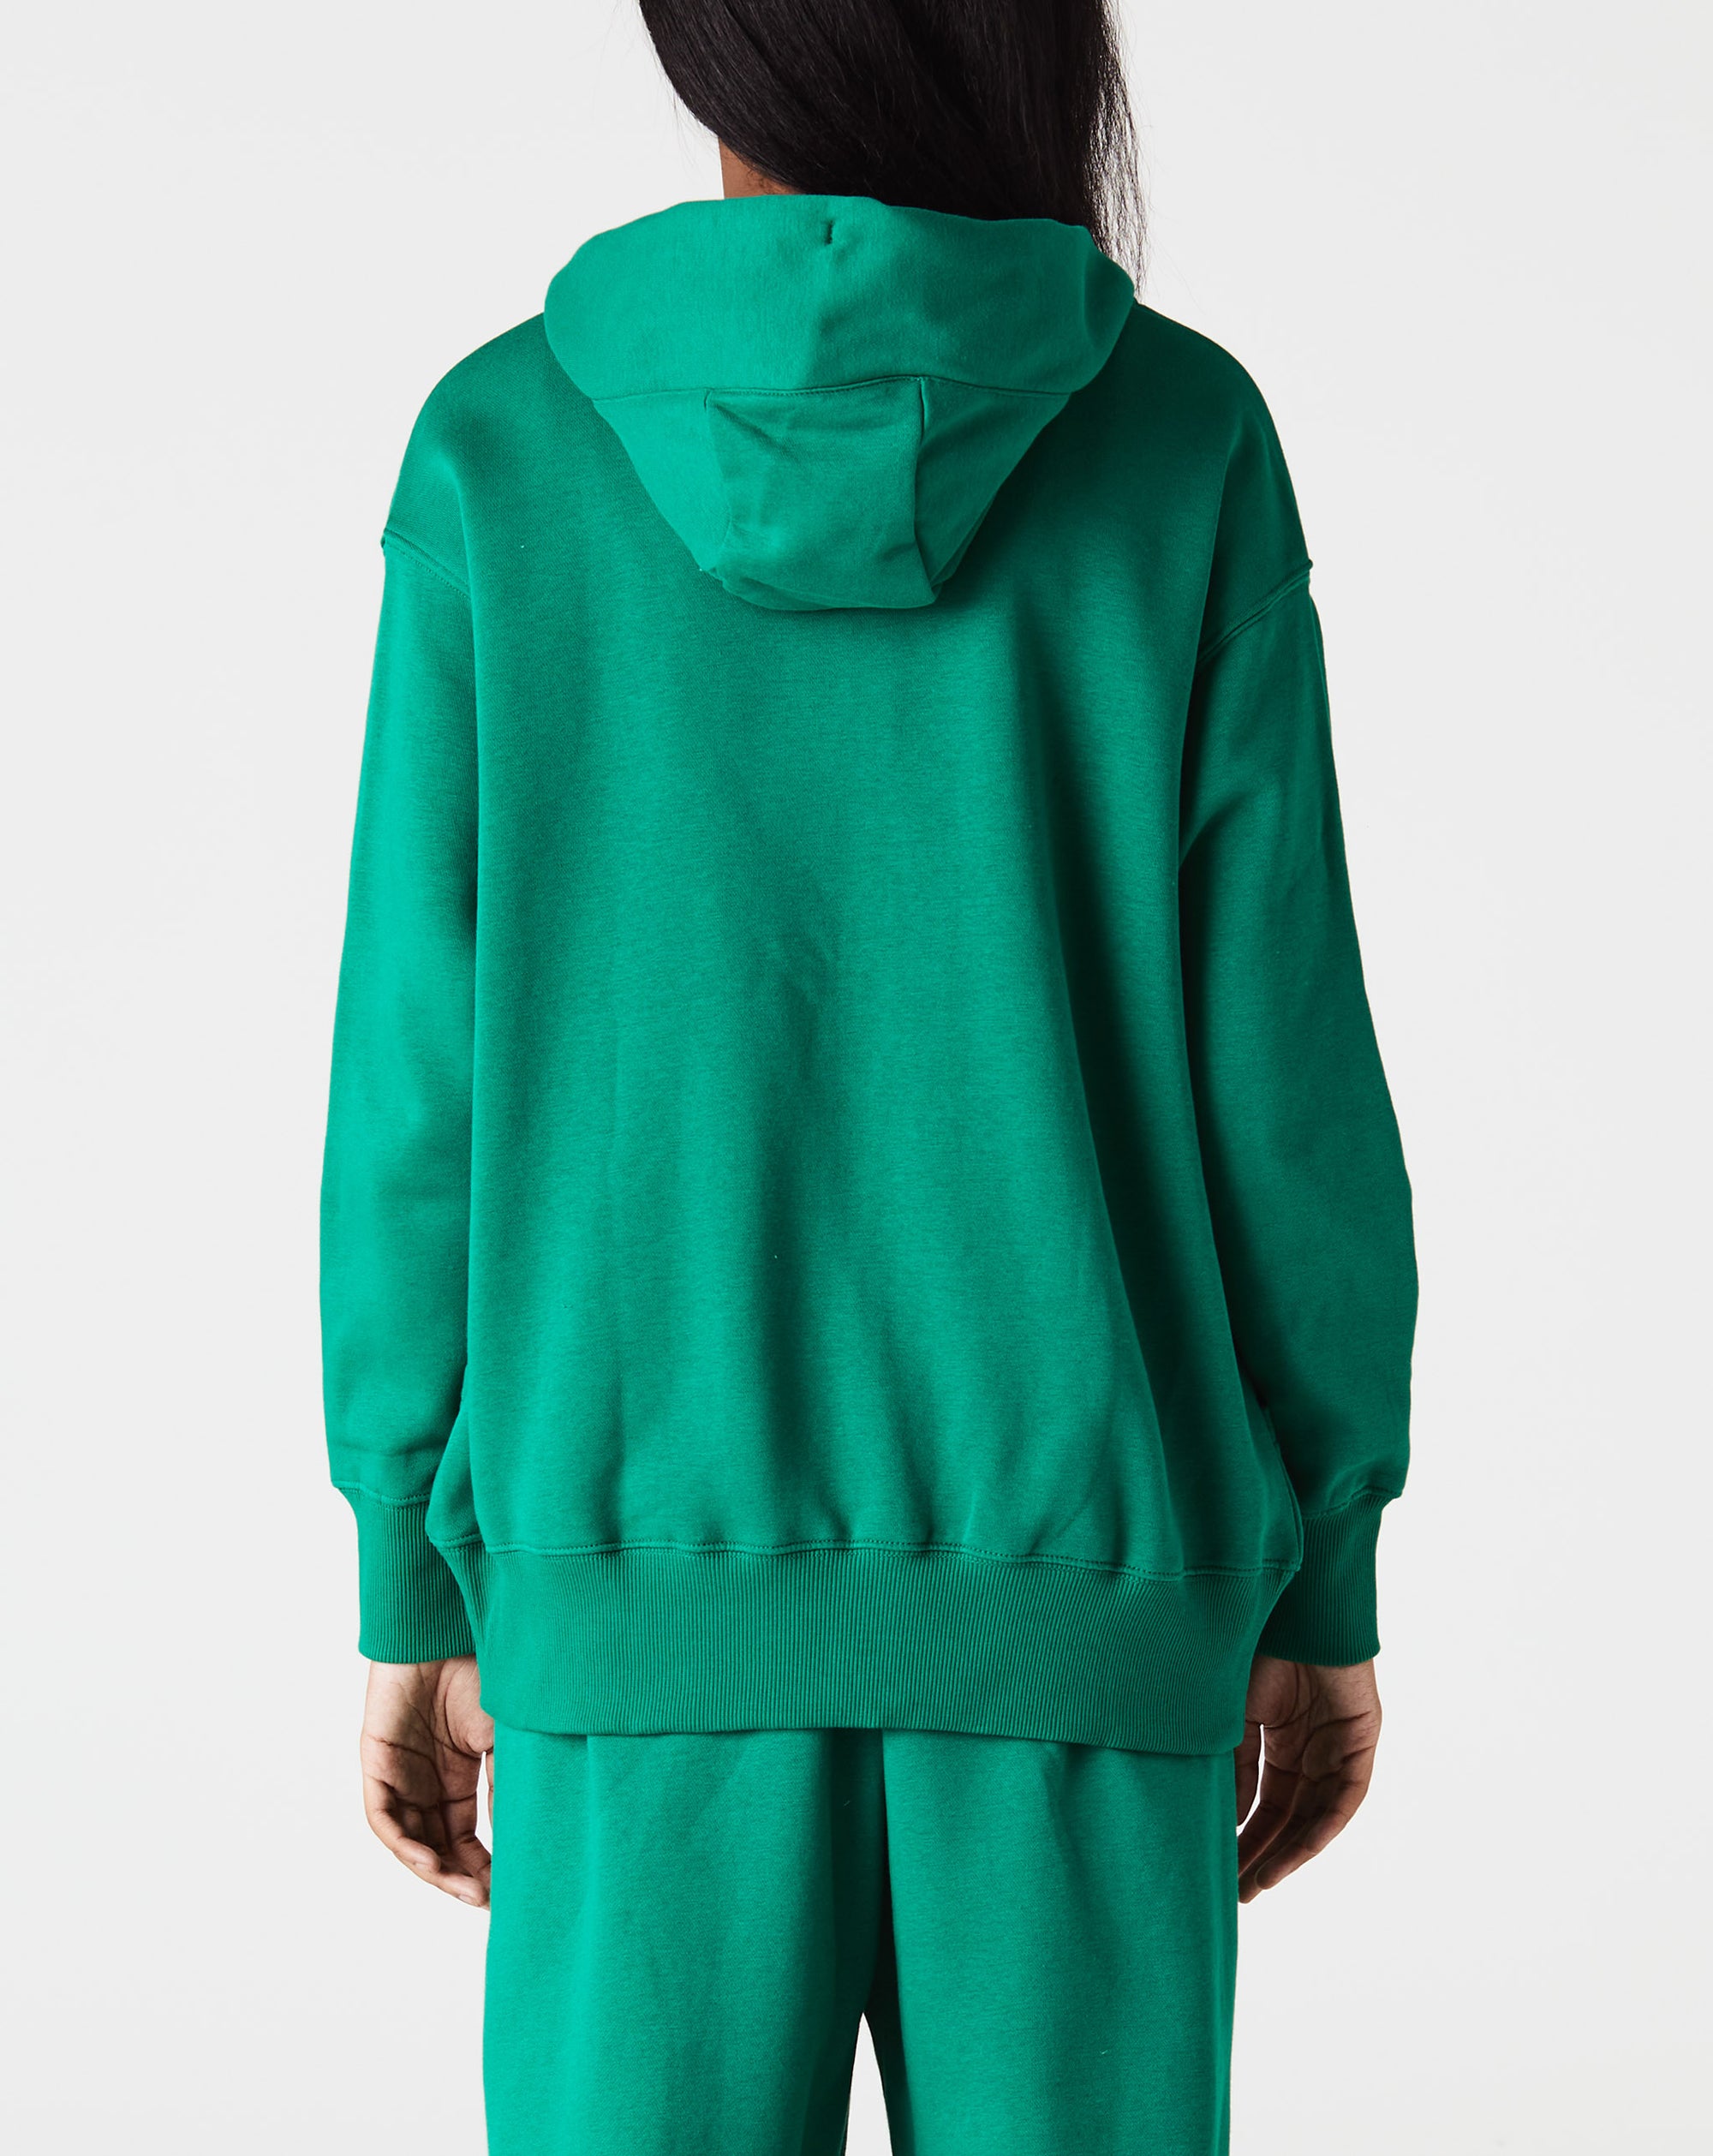 Nike Women's Phoenix Fleece Oversized Full-Zip Hoodie - Rule of Next Apparel